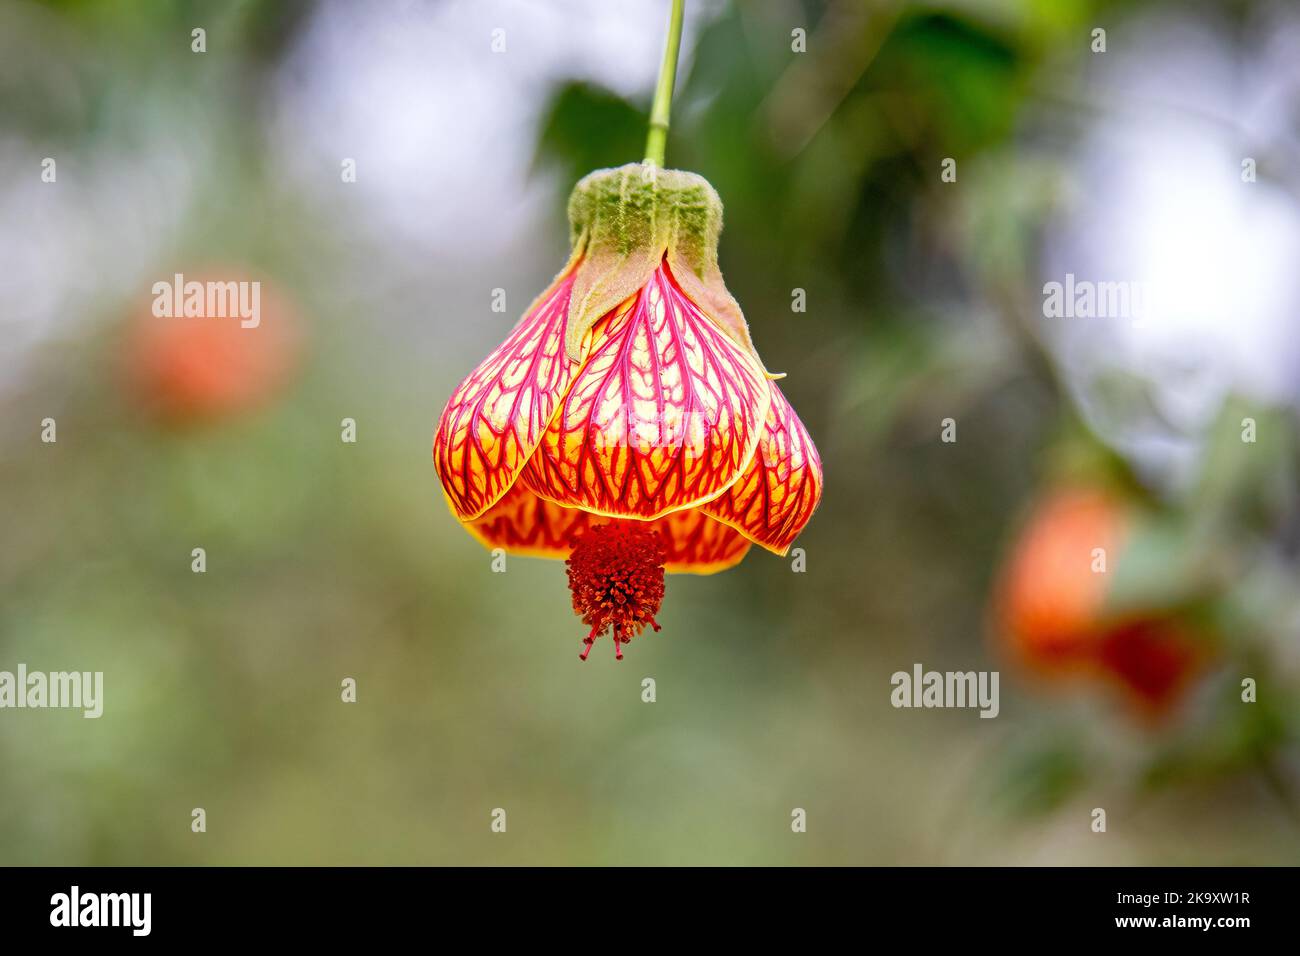 Abutilon Chinese lantern flower, abutilon striatum, an evergreen member of the nightshade family. Orange and yellow bell flower with prominent crimson Stock Photo